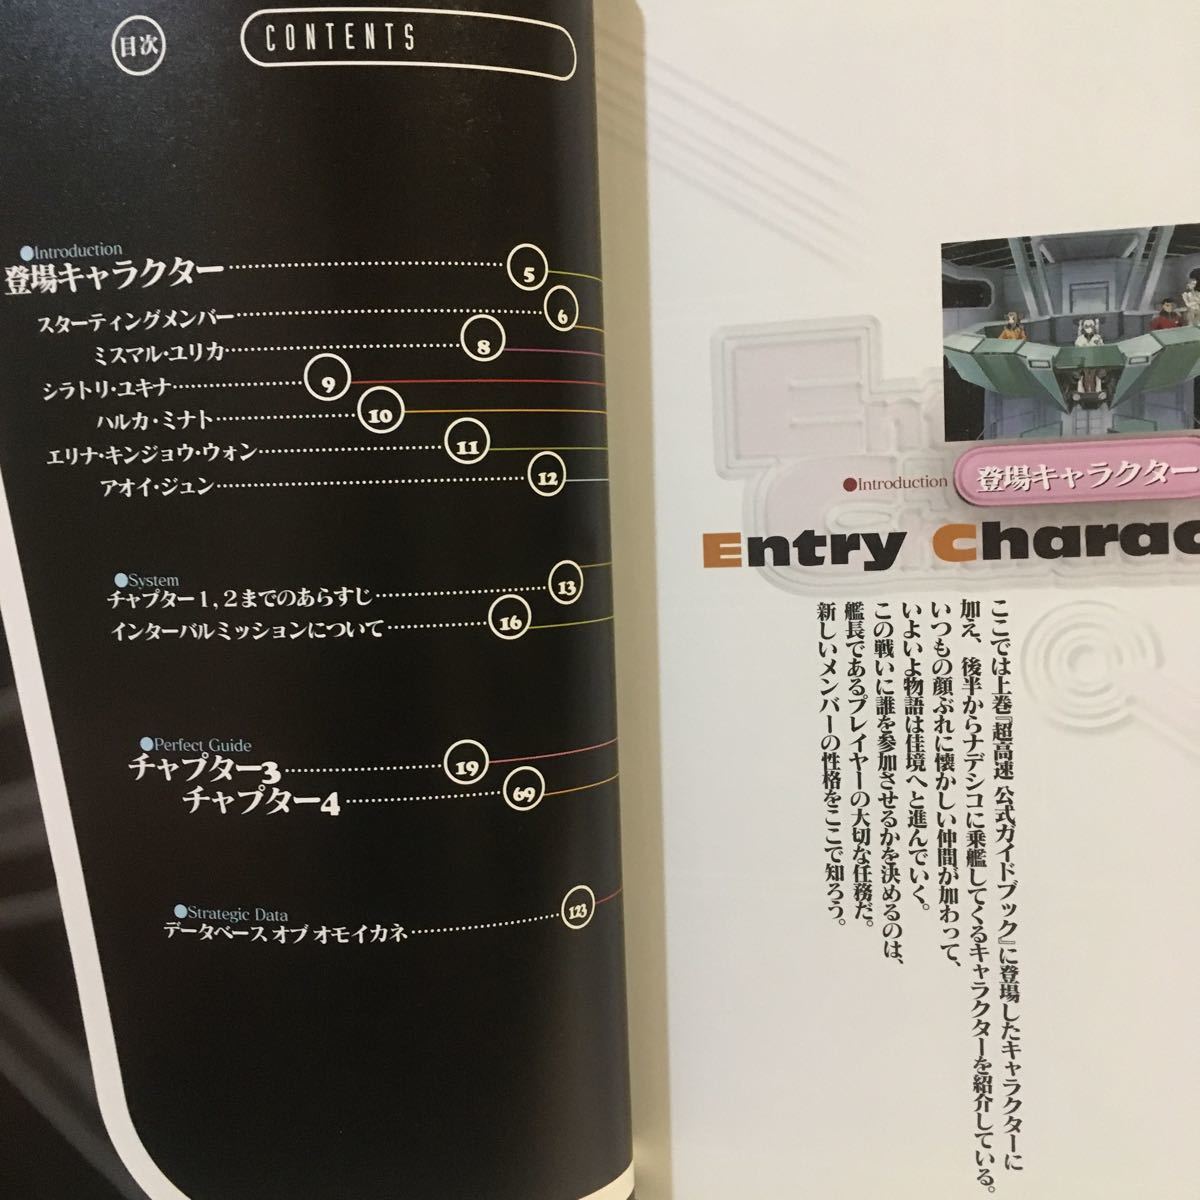  Nadeshiko The Mission NADESICO THE MISSION супер машина . официальный путеводитель Kadokawa Shoten 1999 год первая версия 